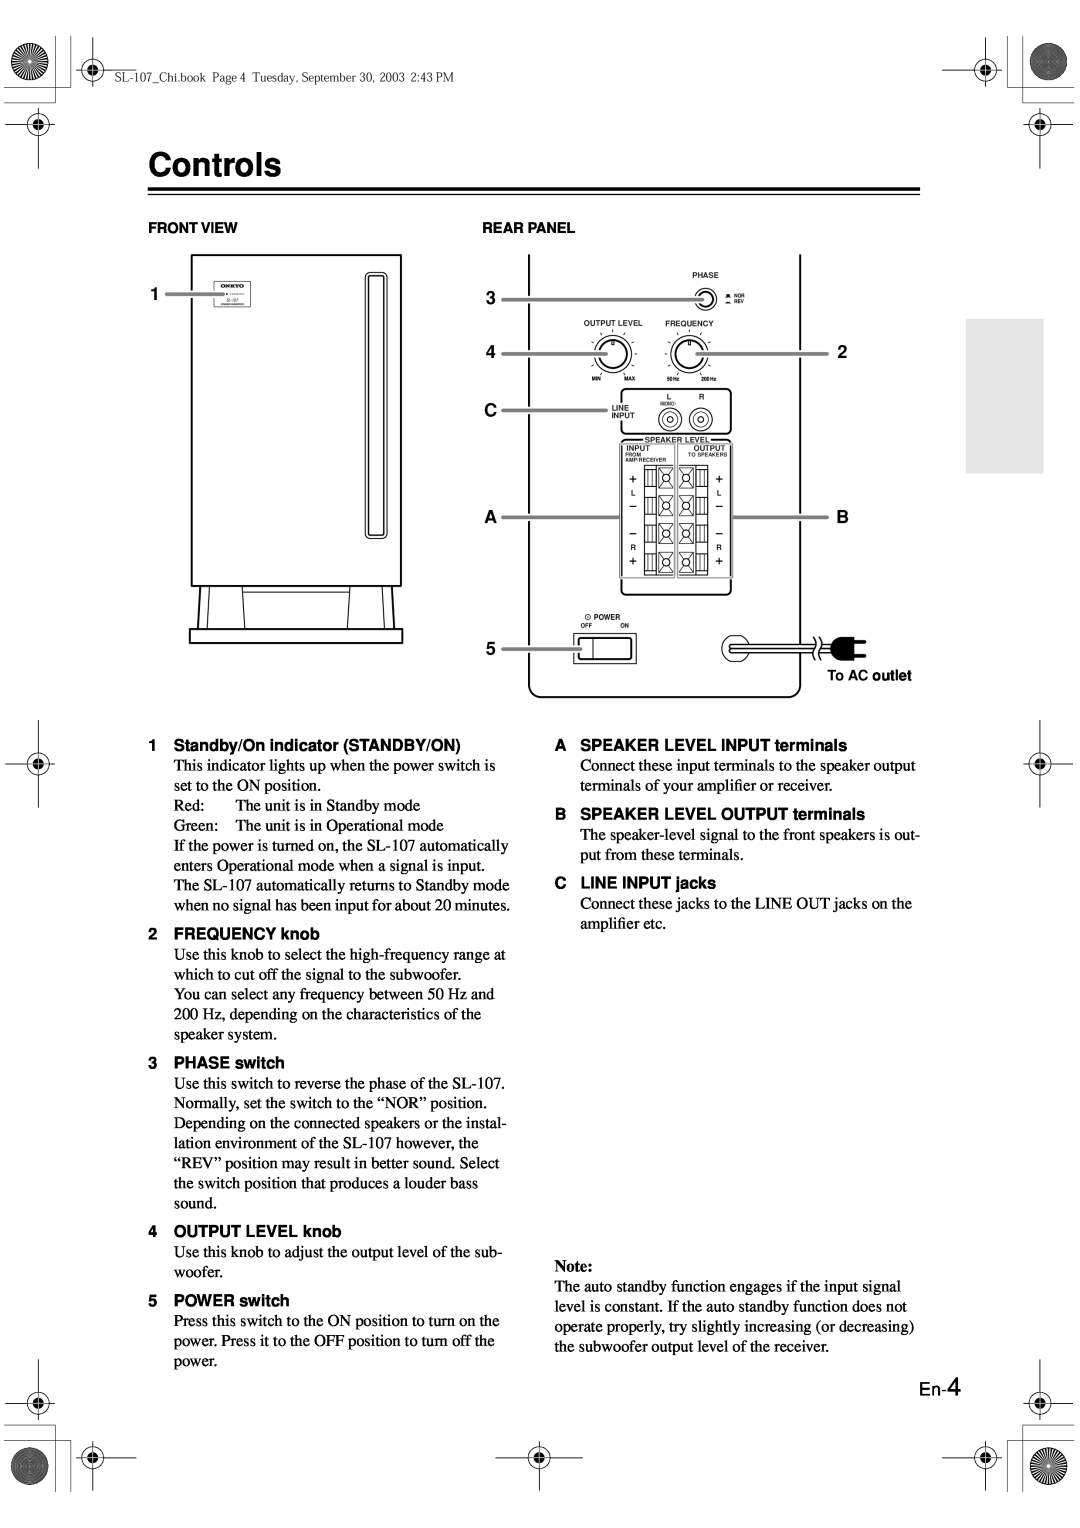 Onkyo SL-107 instruction manual Controls, En-4 